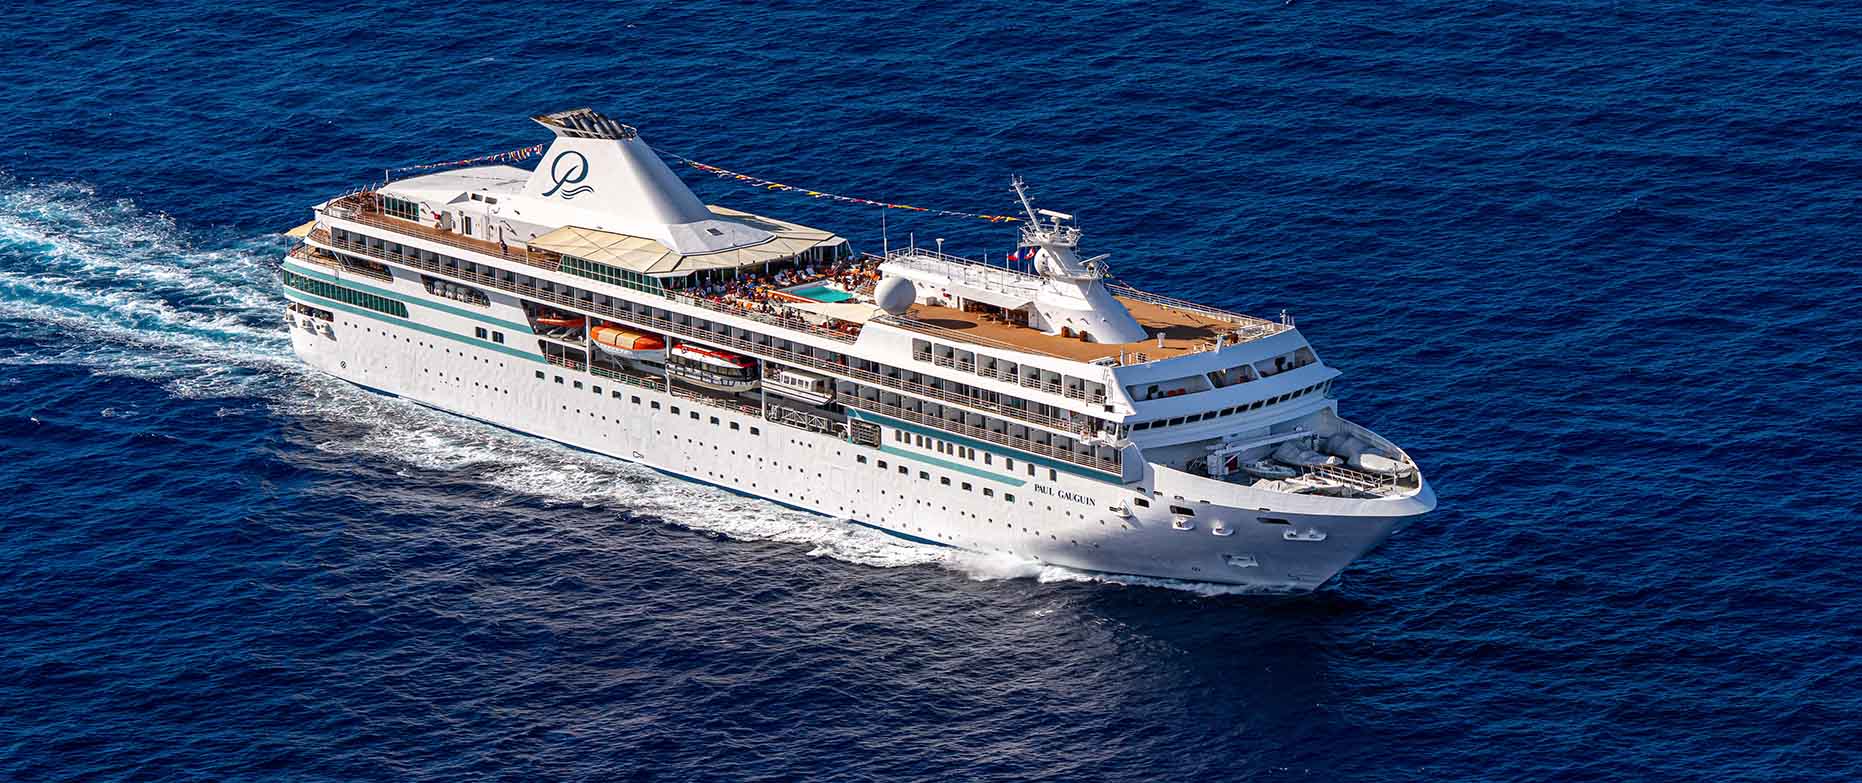 https://www.cruiseline.co.uk/wp-content/uploads/2021/04/paul-gauguin-ponant-cruises-ship.jpg